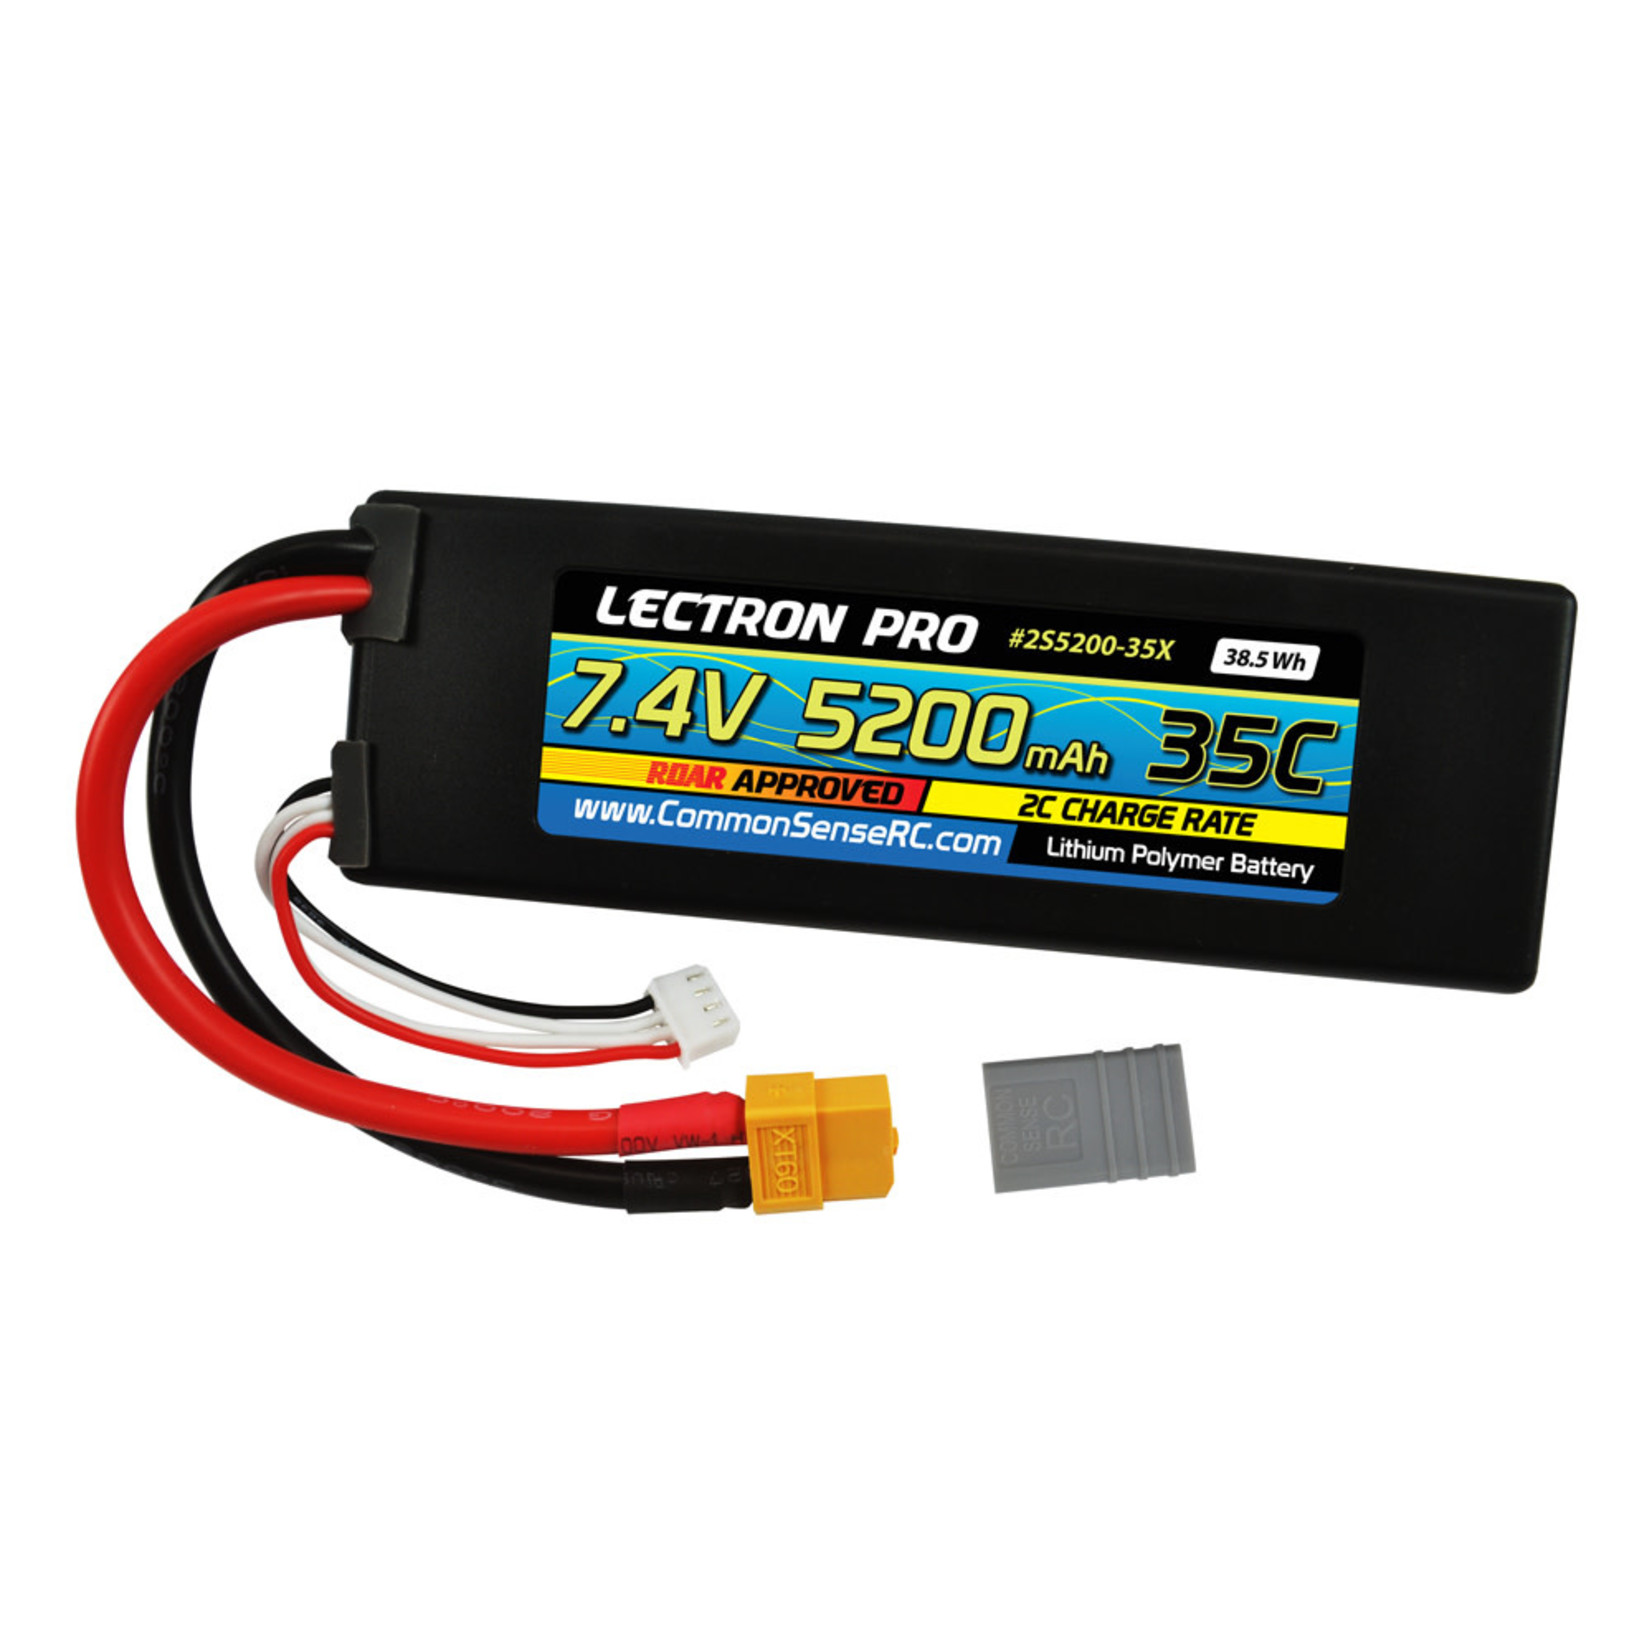 Common Sense RC Common Sense RC Lectron Pro 7.4V 5200mAh 35C LiPo Battery w/XT60 Connector & TRX Adapter #2S5200-35X